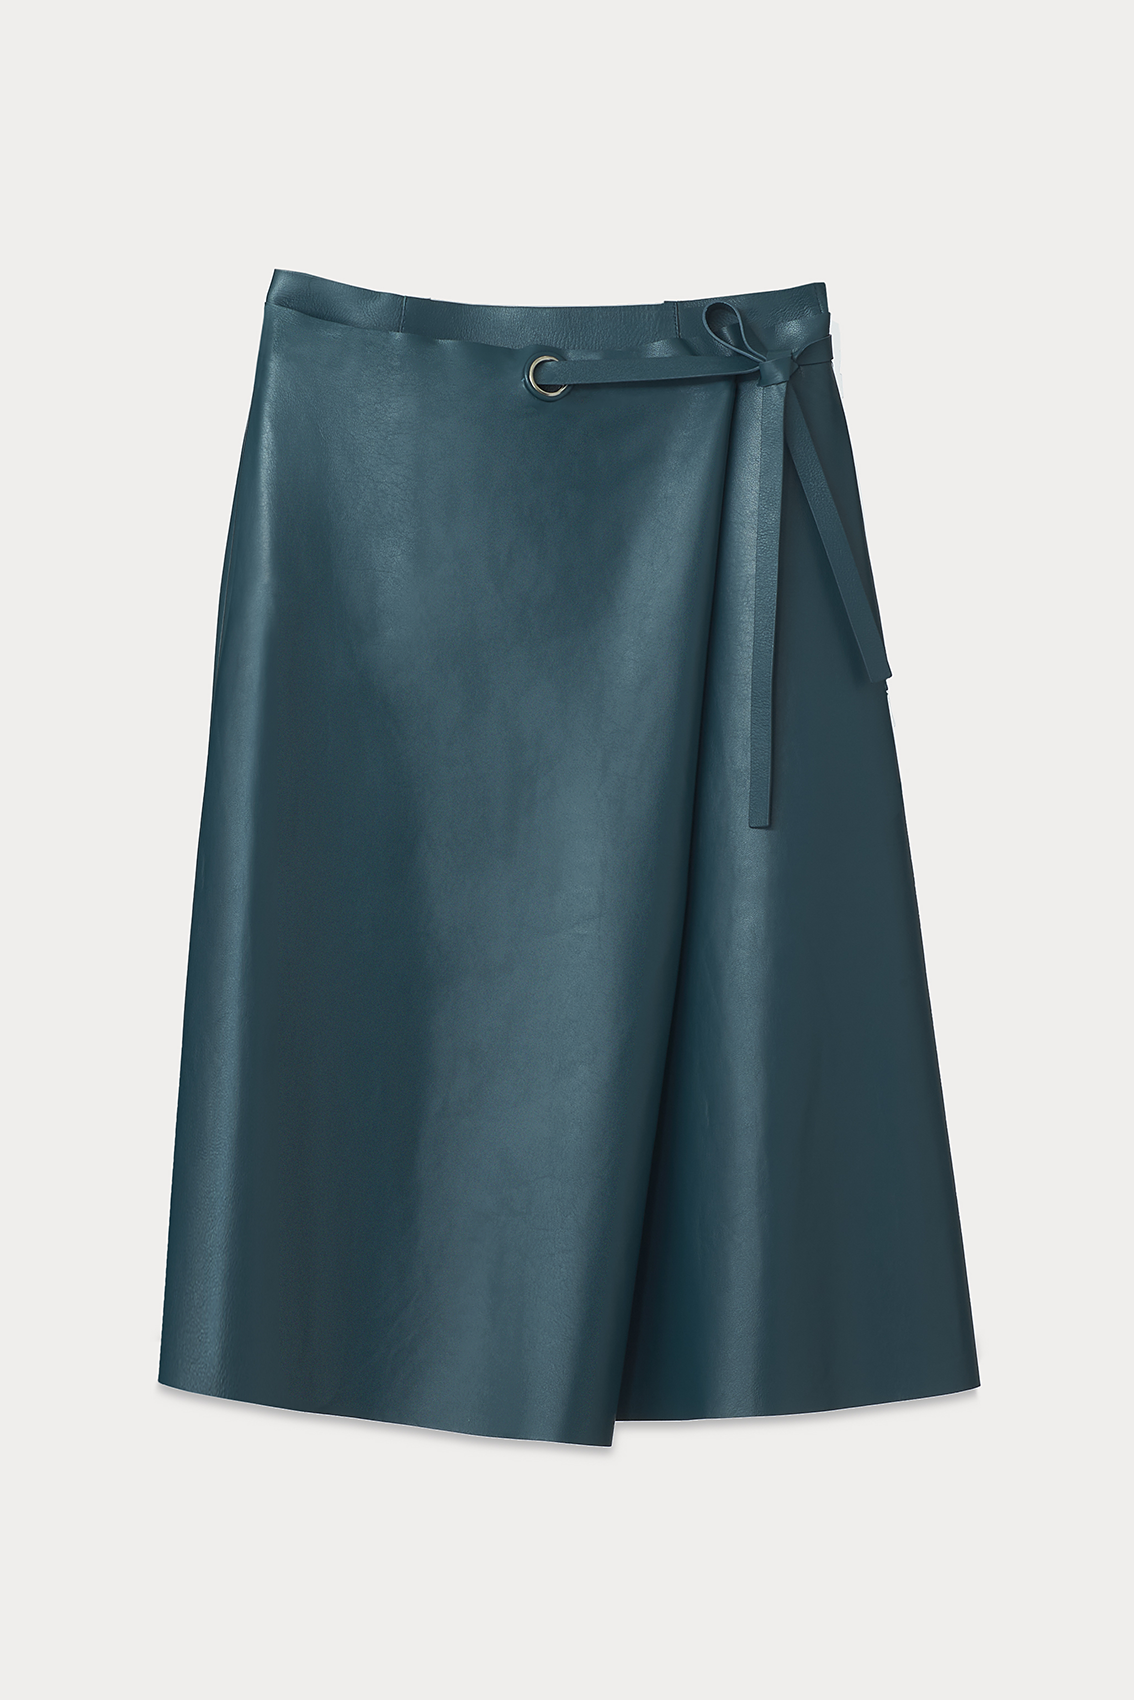 Marine Side Tie Leather A-Line Skirt